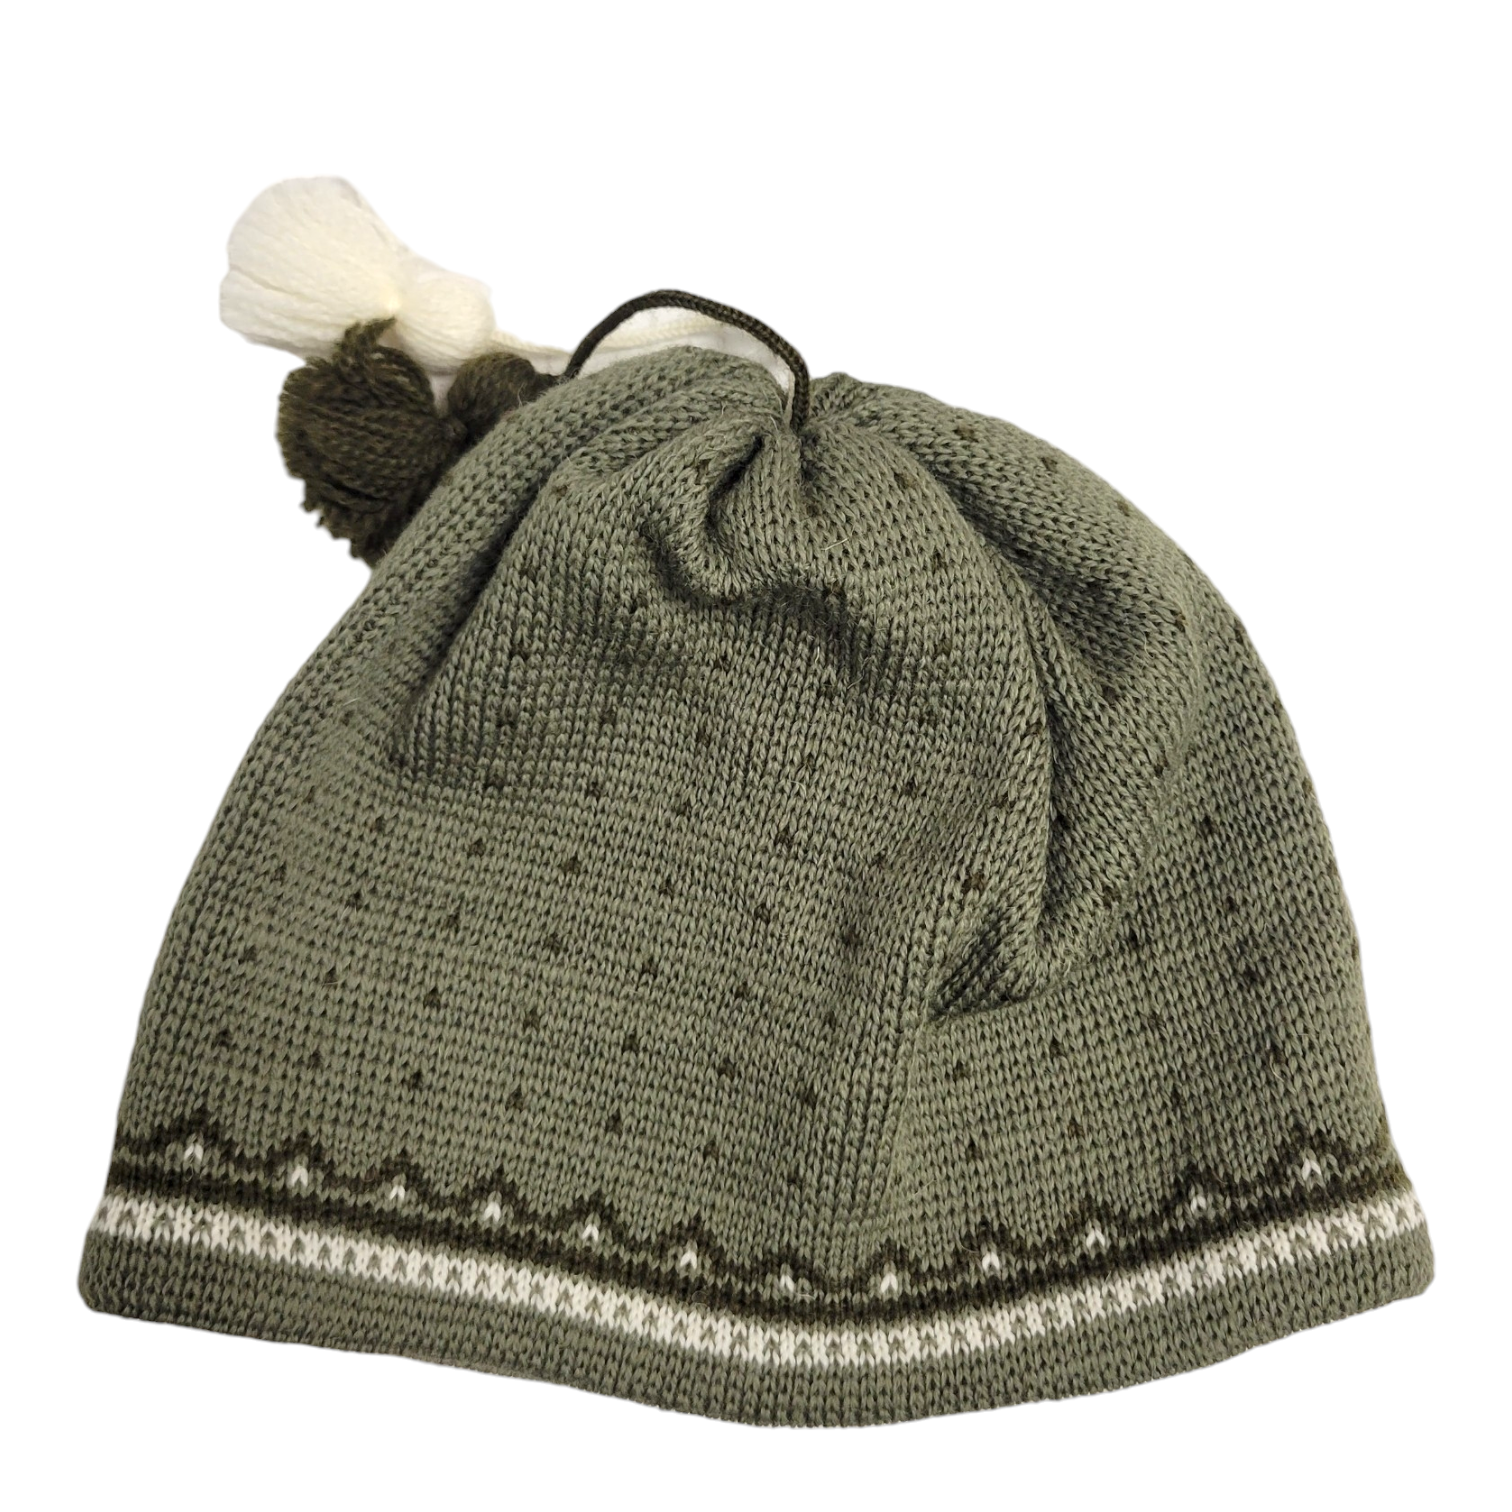 Hat: Norwool Moss Green Classic Norwegian Knit Hat